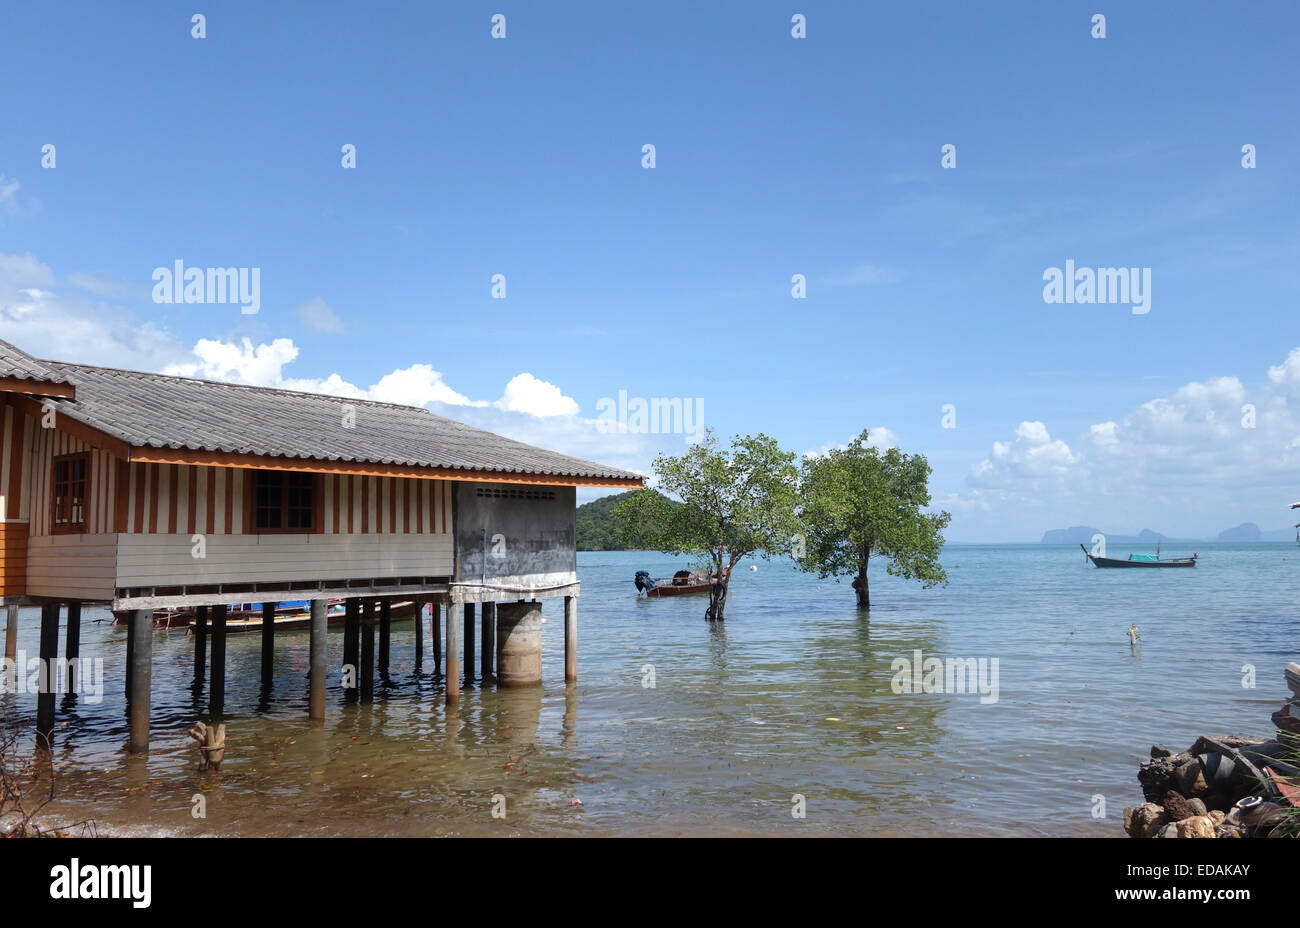 House on stilts, Sea gypsy village, mangrove trees, Koh Lanta, Thailand, Southeast Asia. Stock Photo